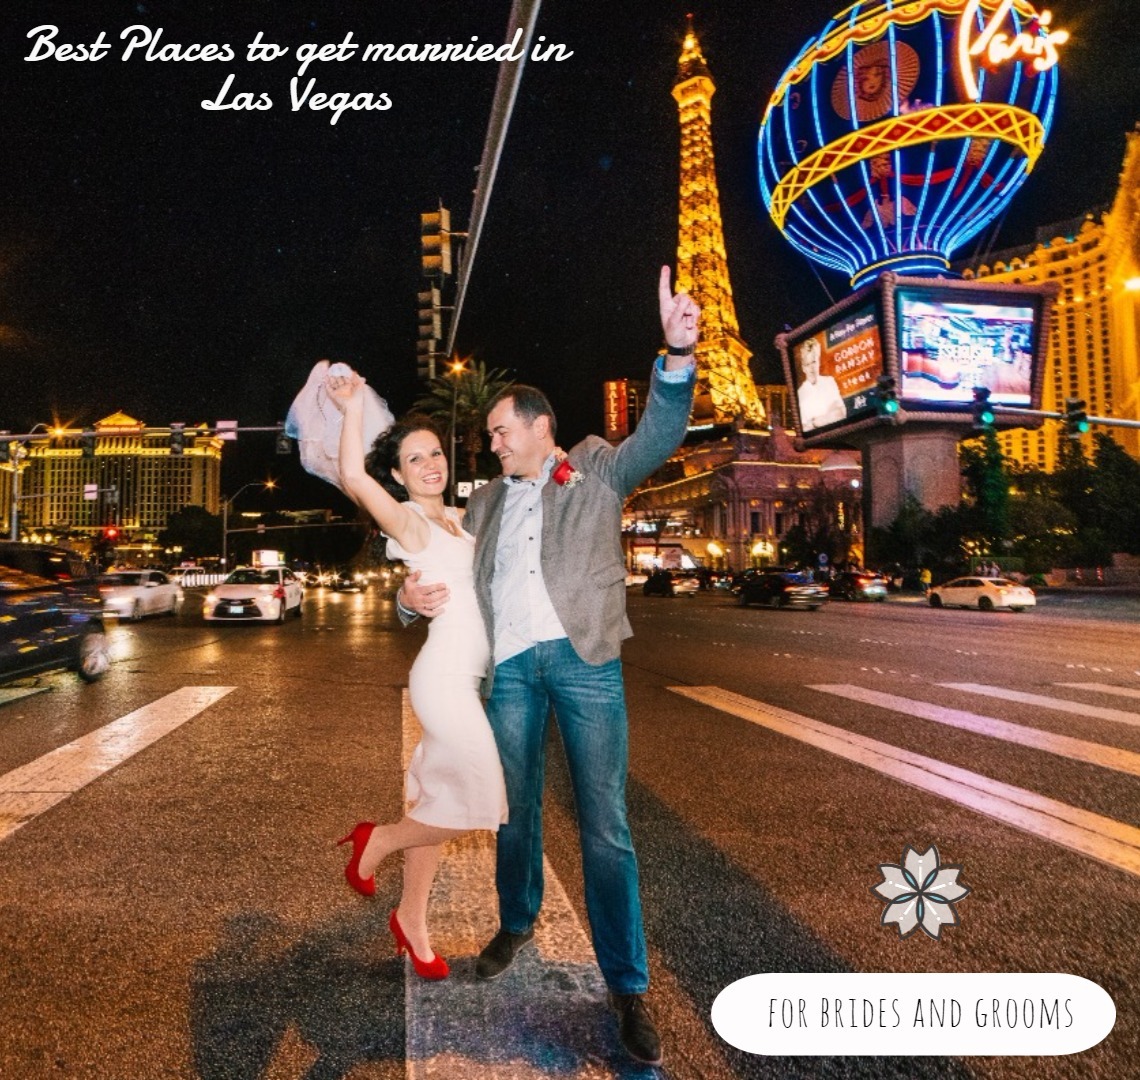 Best Places to get married in Las Vegas